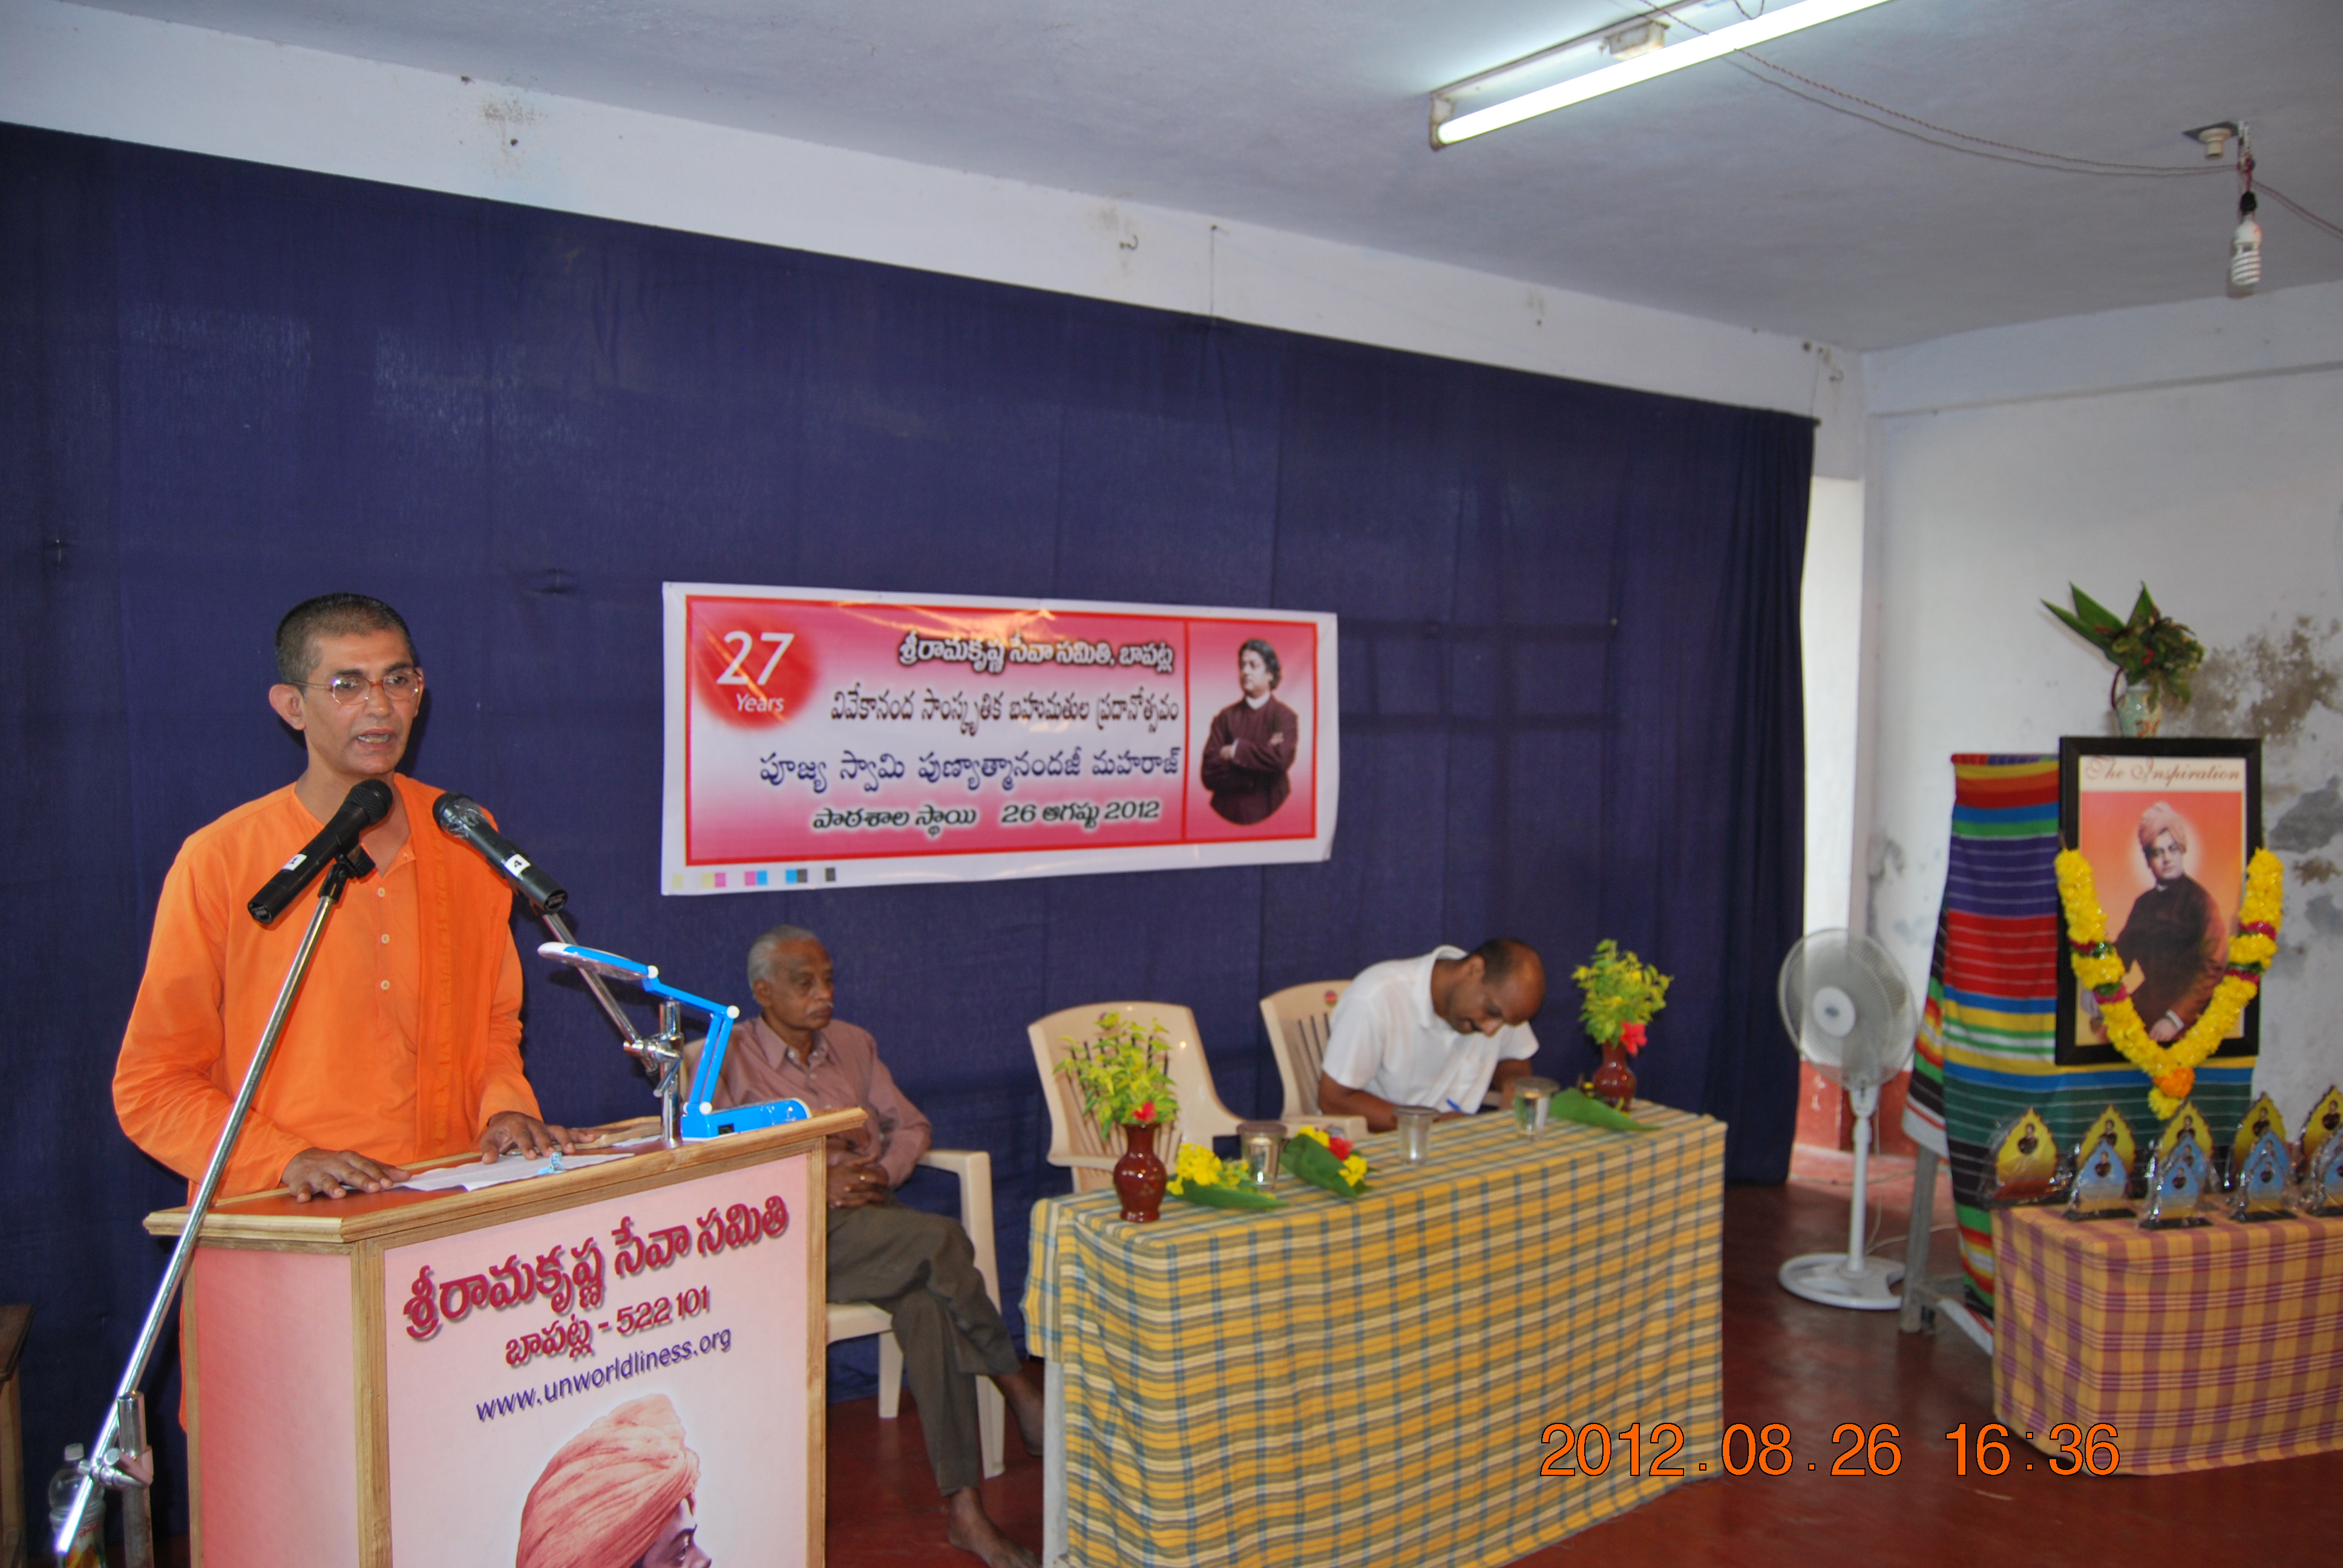 Rev. Swami Punyatmanandaji Maharaj addressing the children